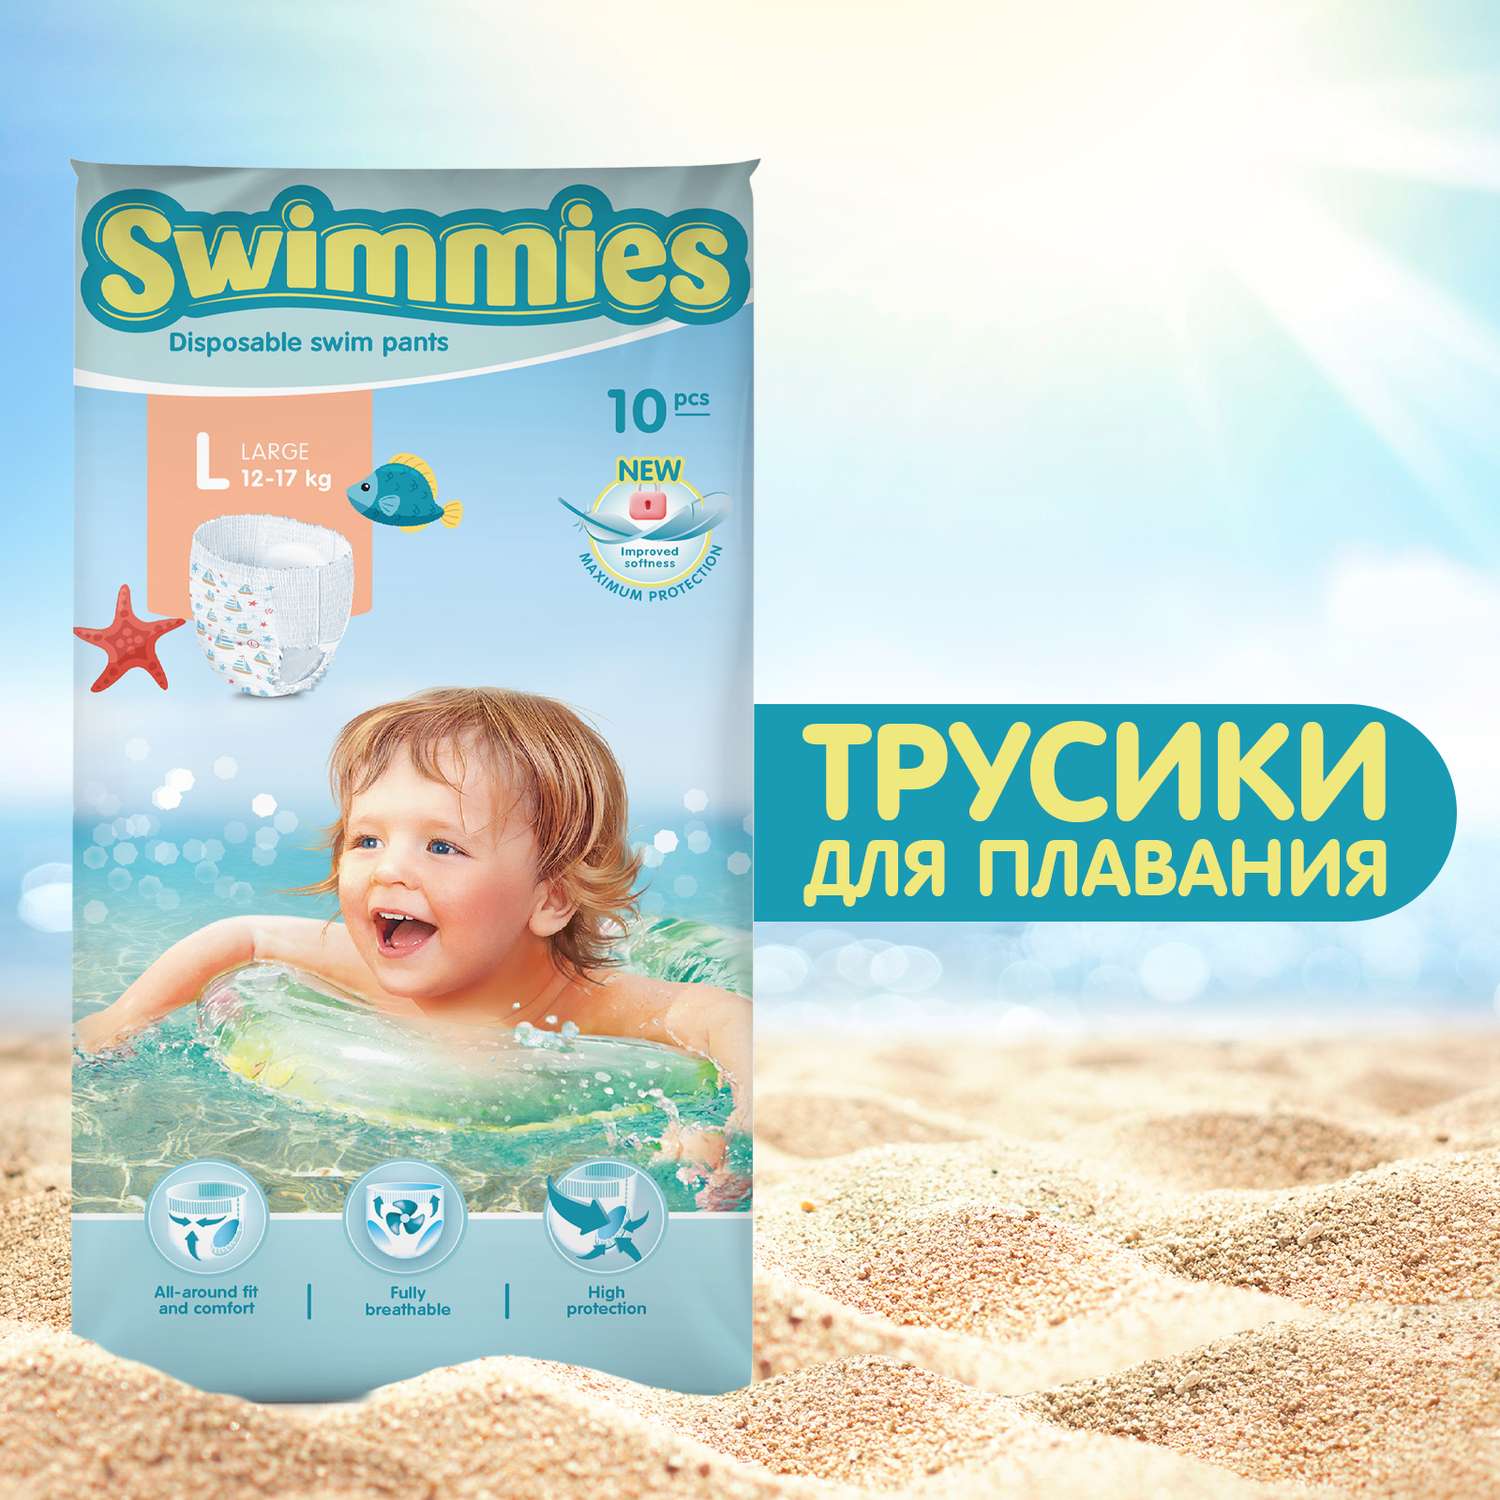 Детские трусики для плавания Swimmies размер L 10 шт - фото 1